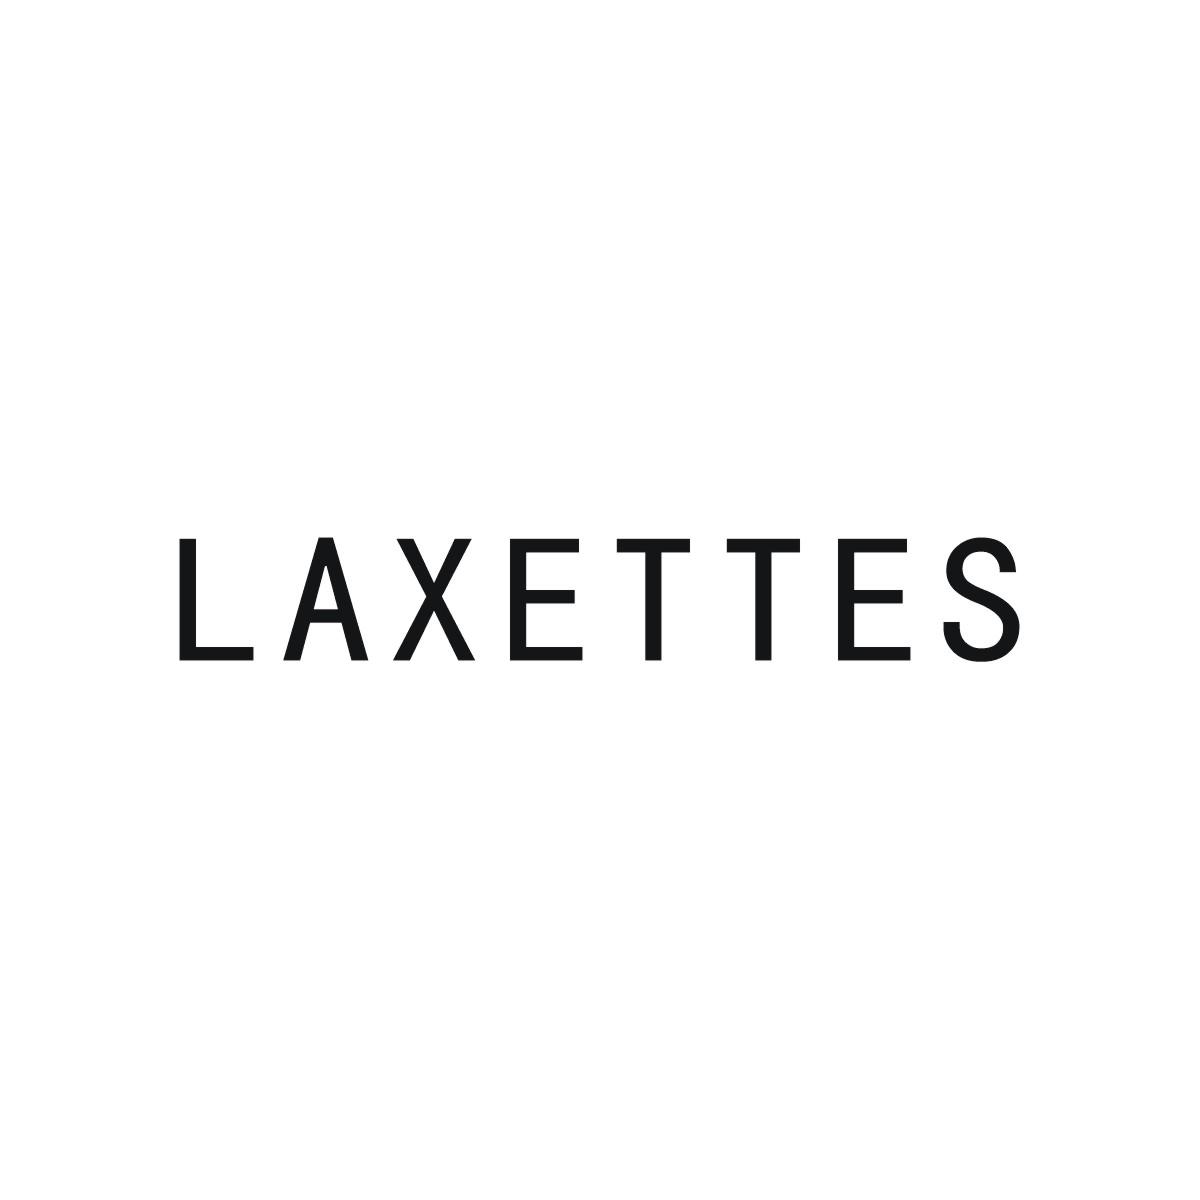 30类-面点饮品LAXETTES商标转让